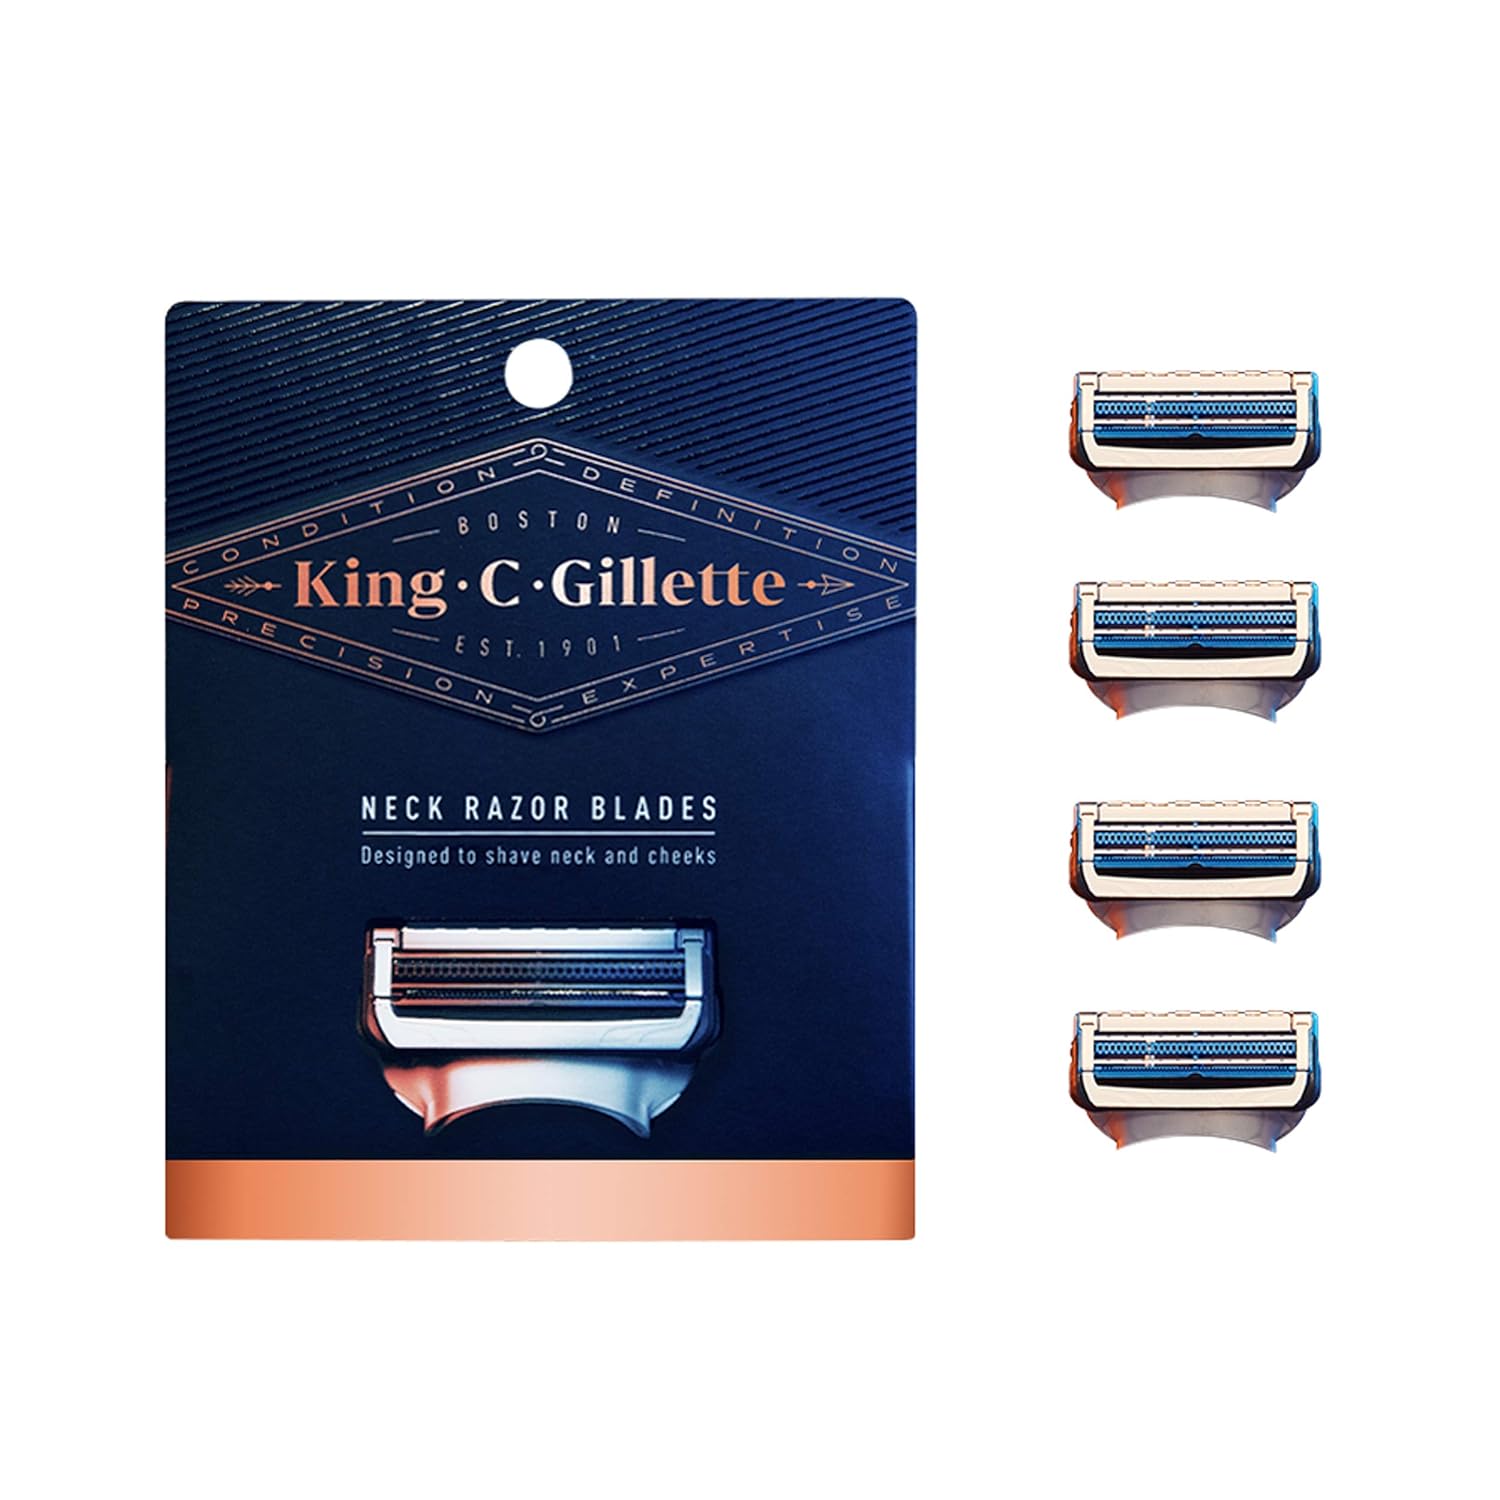 King C. Gillette Neck Razor Blades, 4 Count